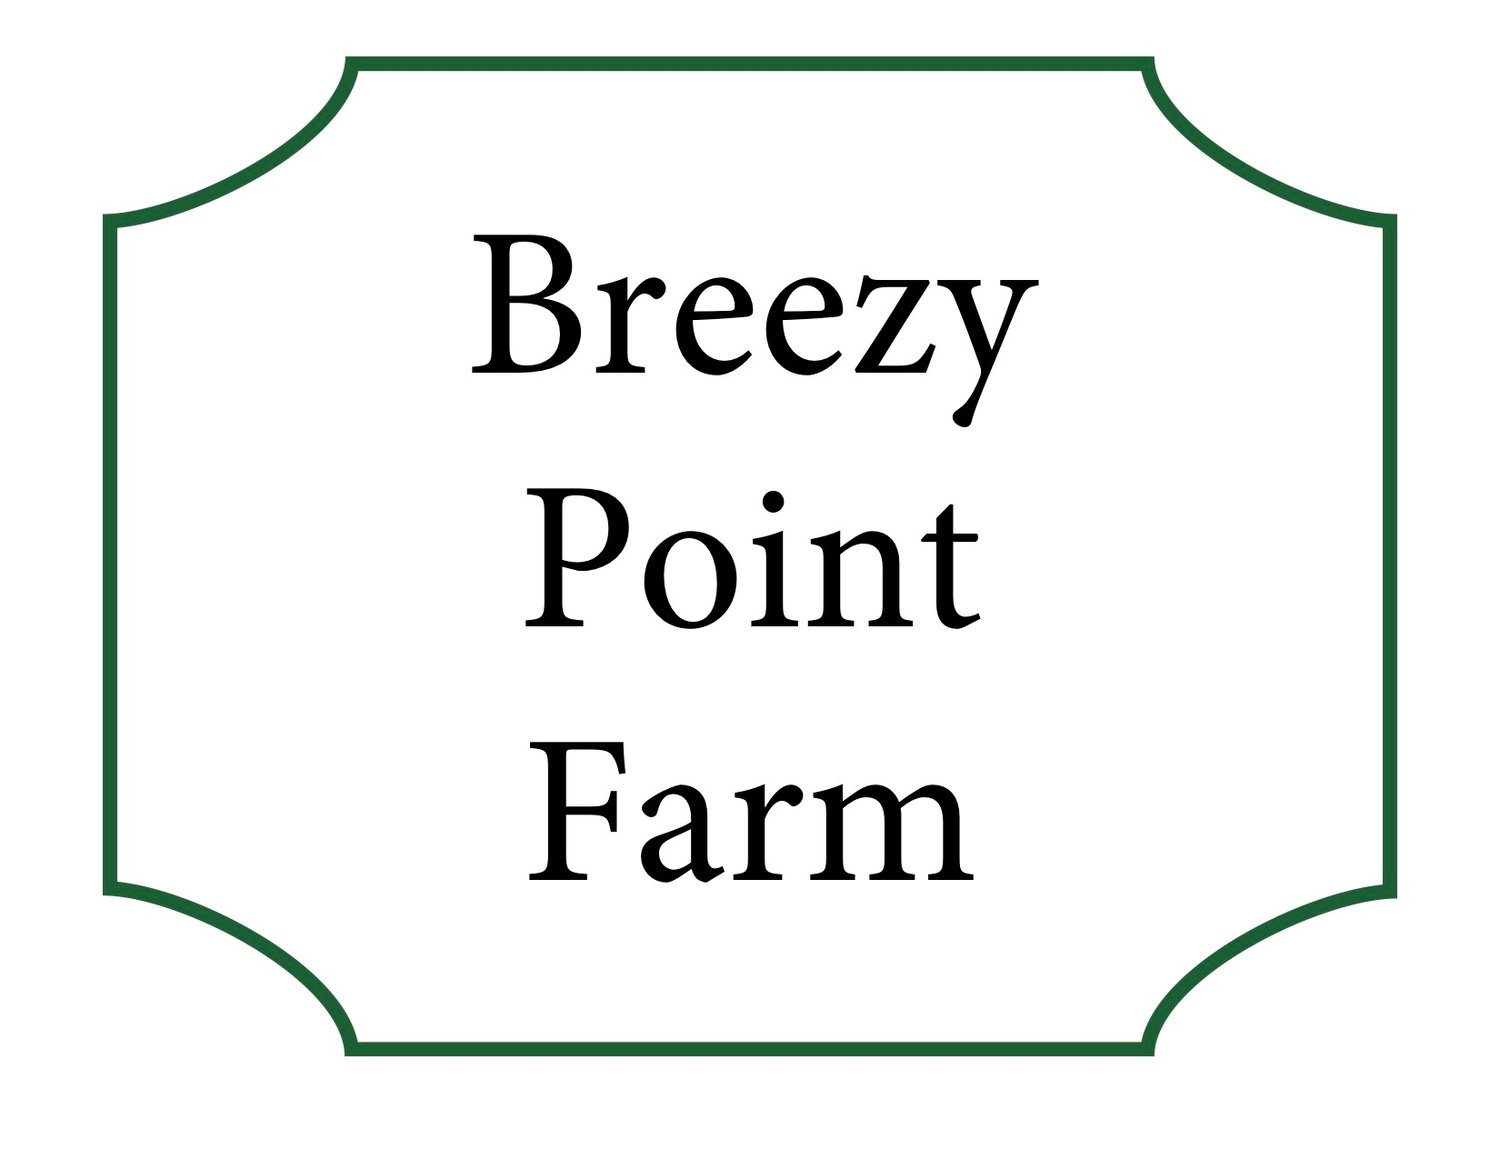 About Breezy Point Farm